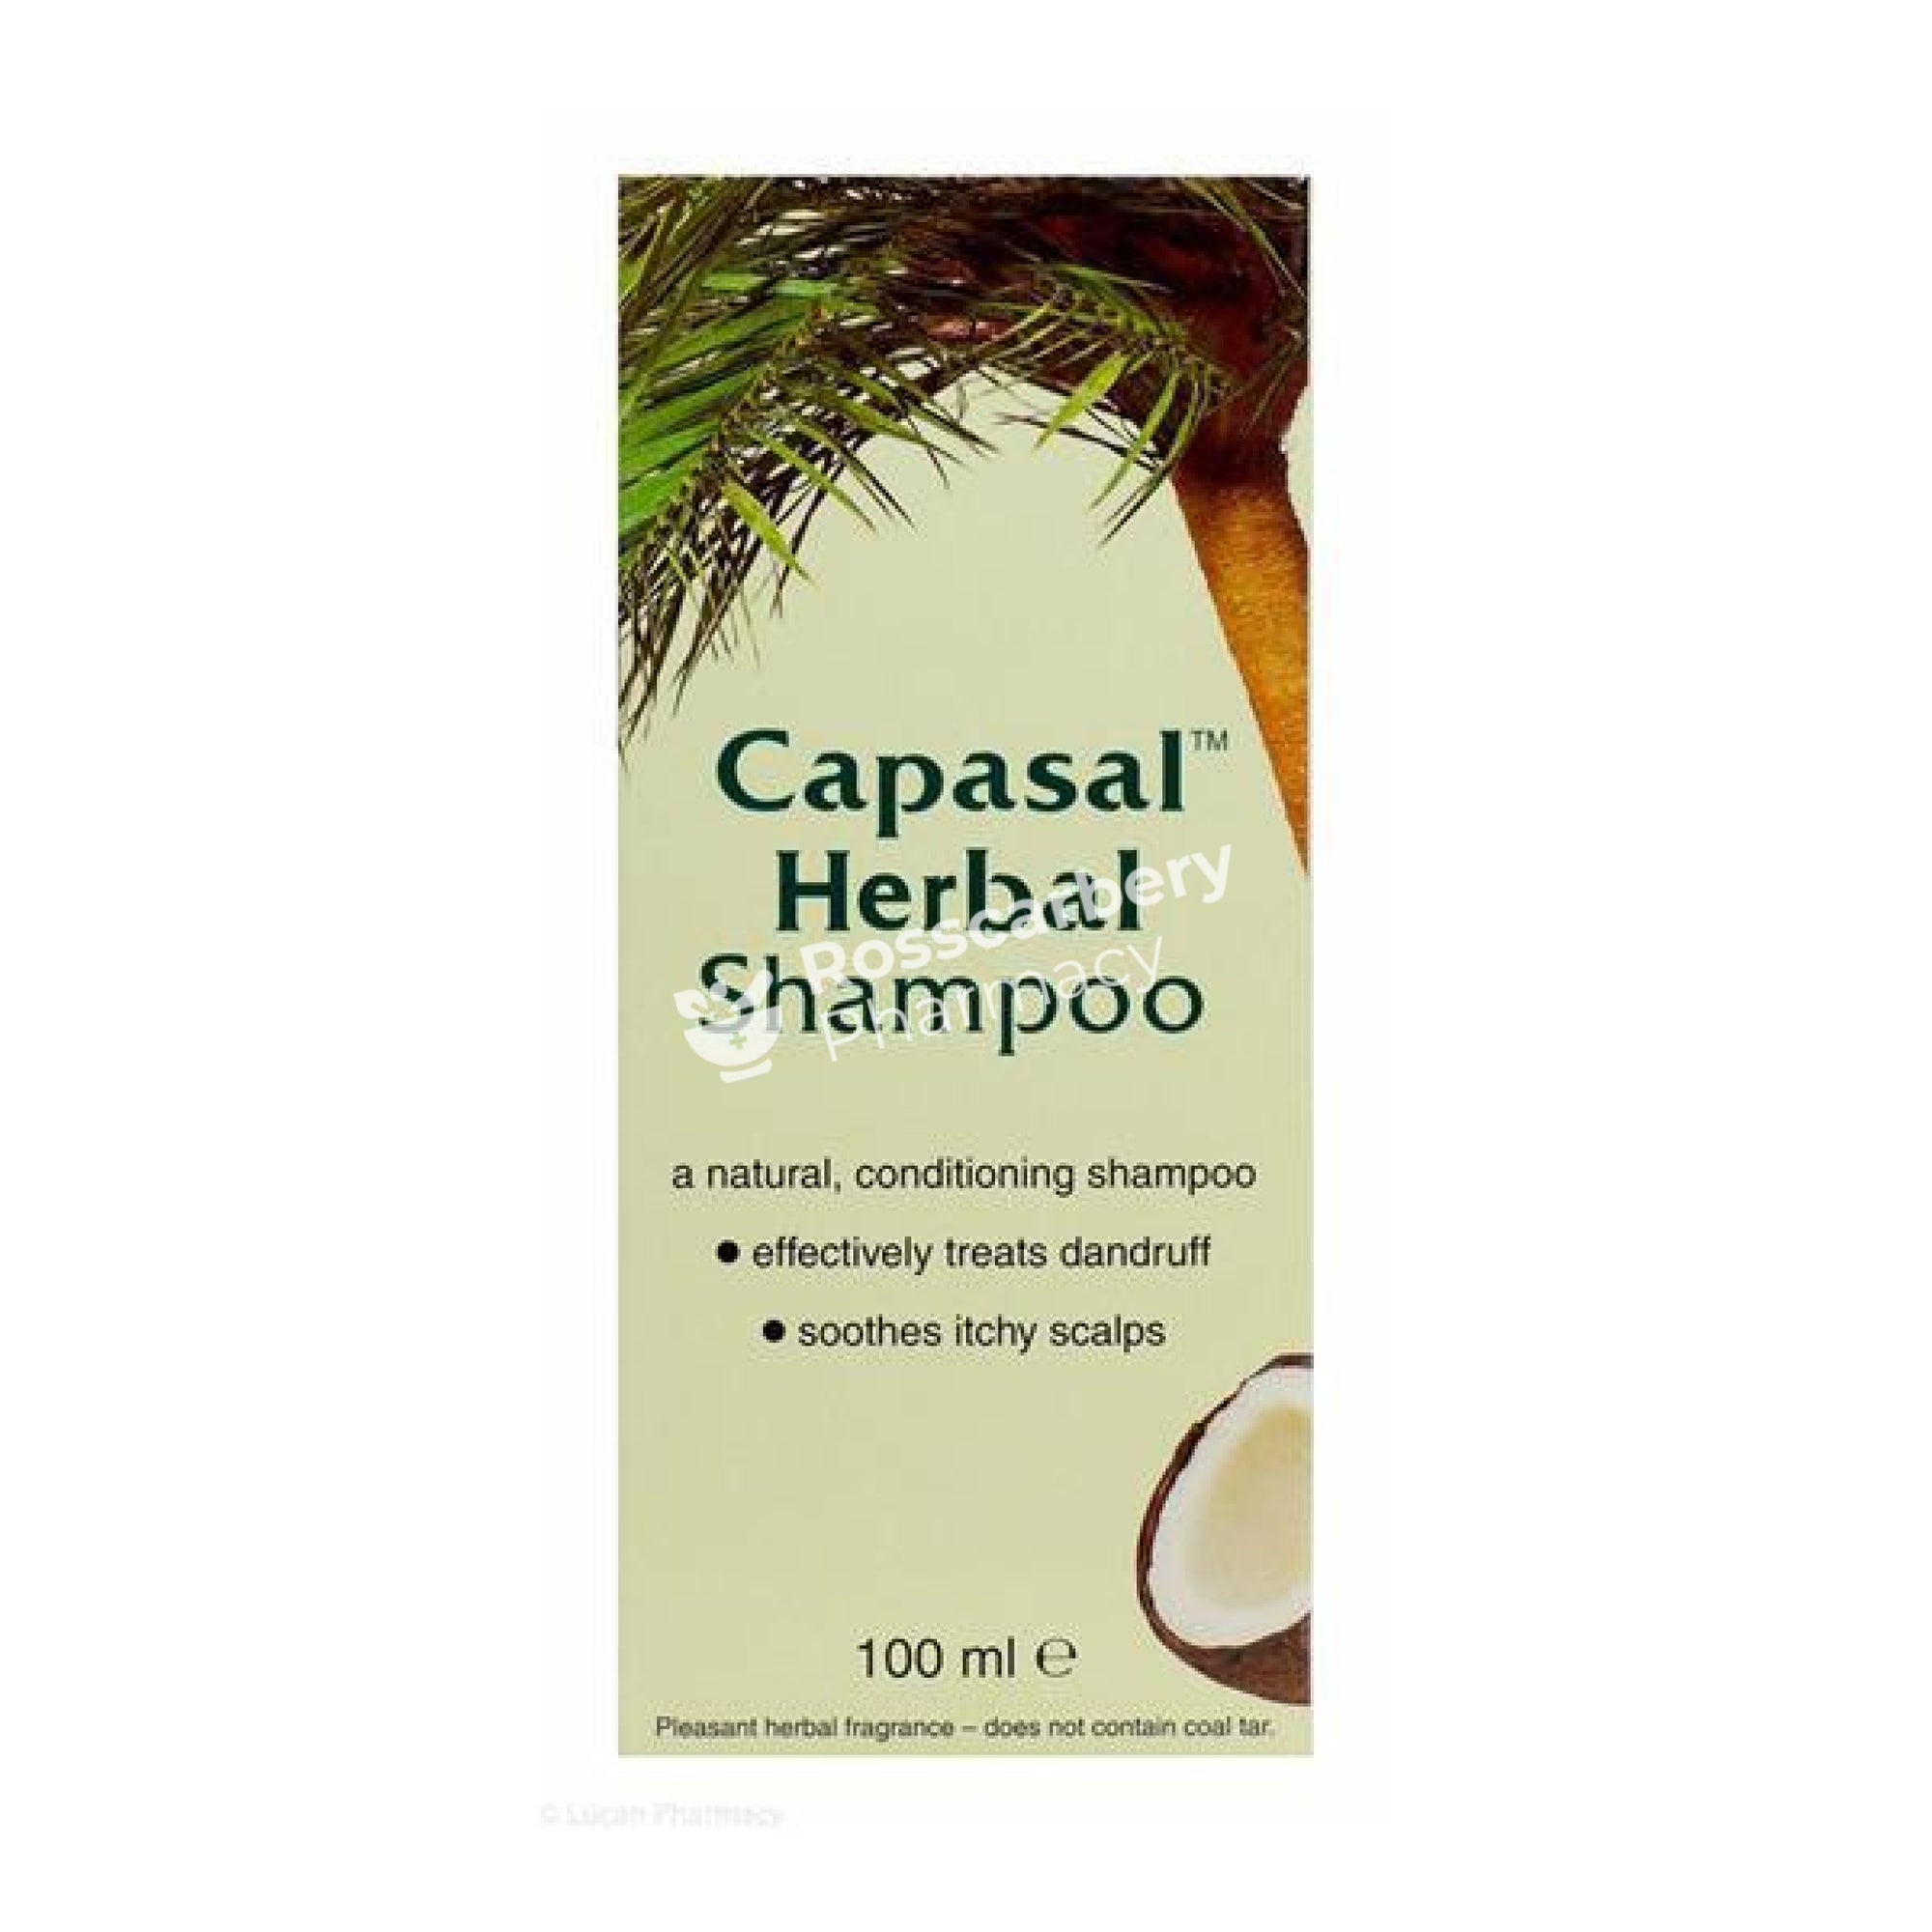 Capasal Herbal Shampoo